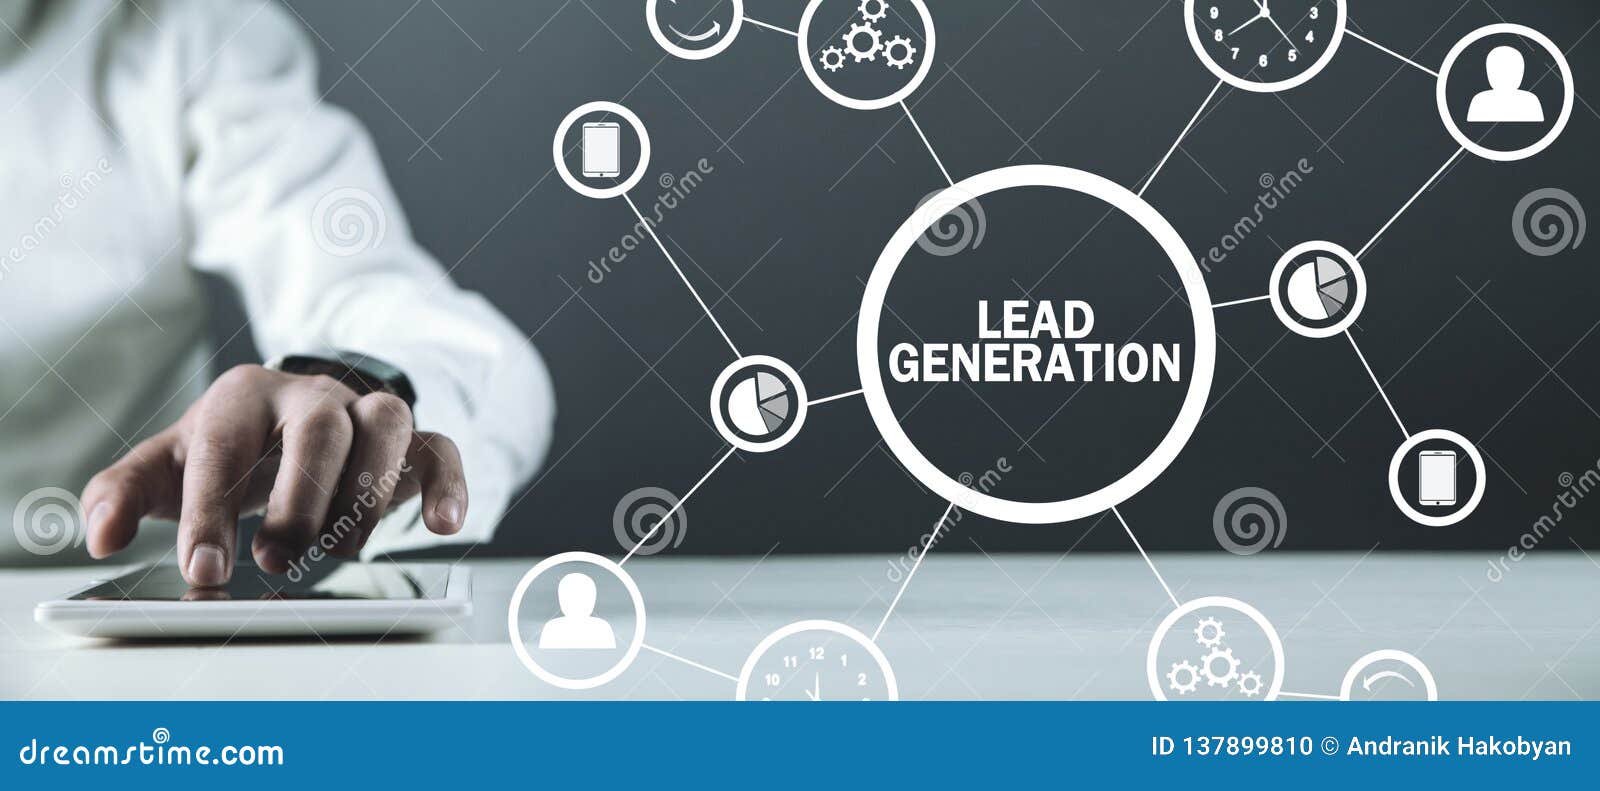 lead generation technology